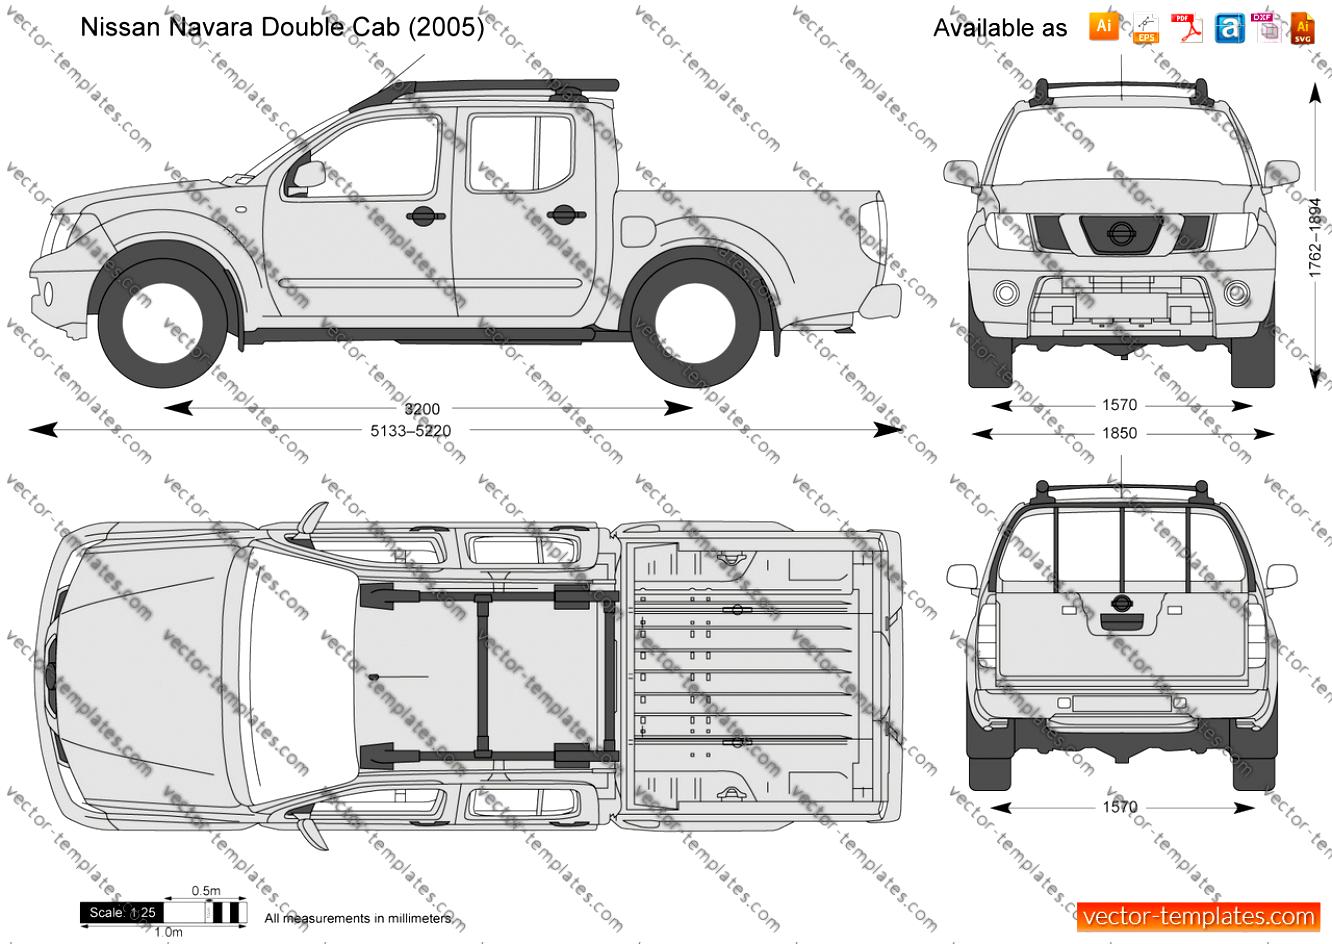 Nissan Navara / Frontier Double Cab 2005 #38